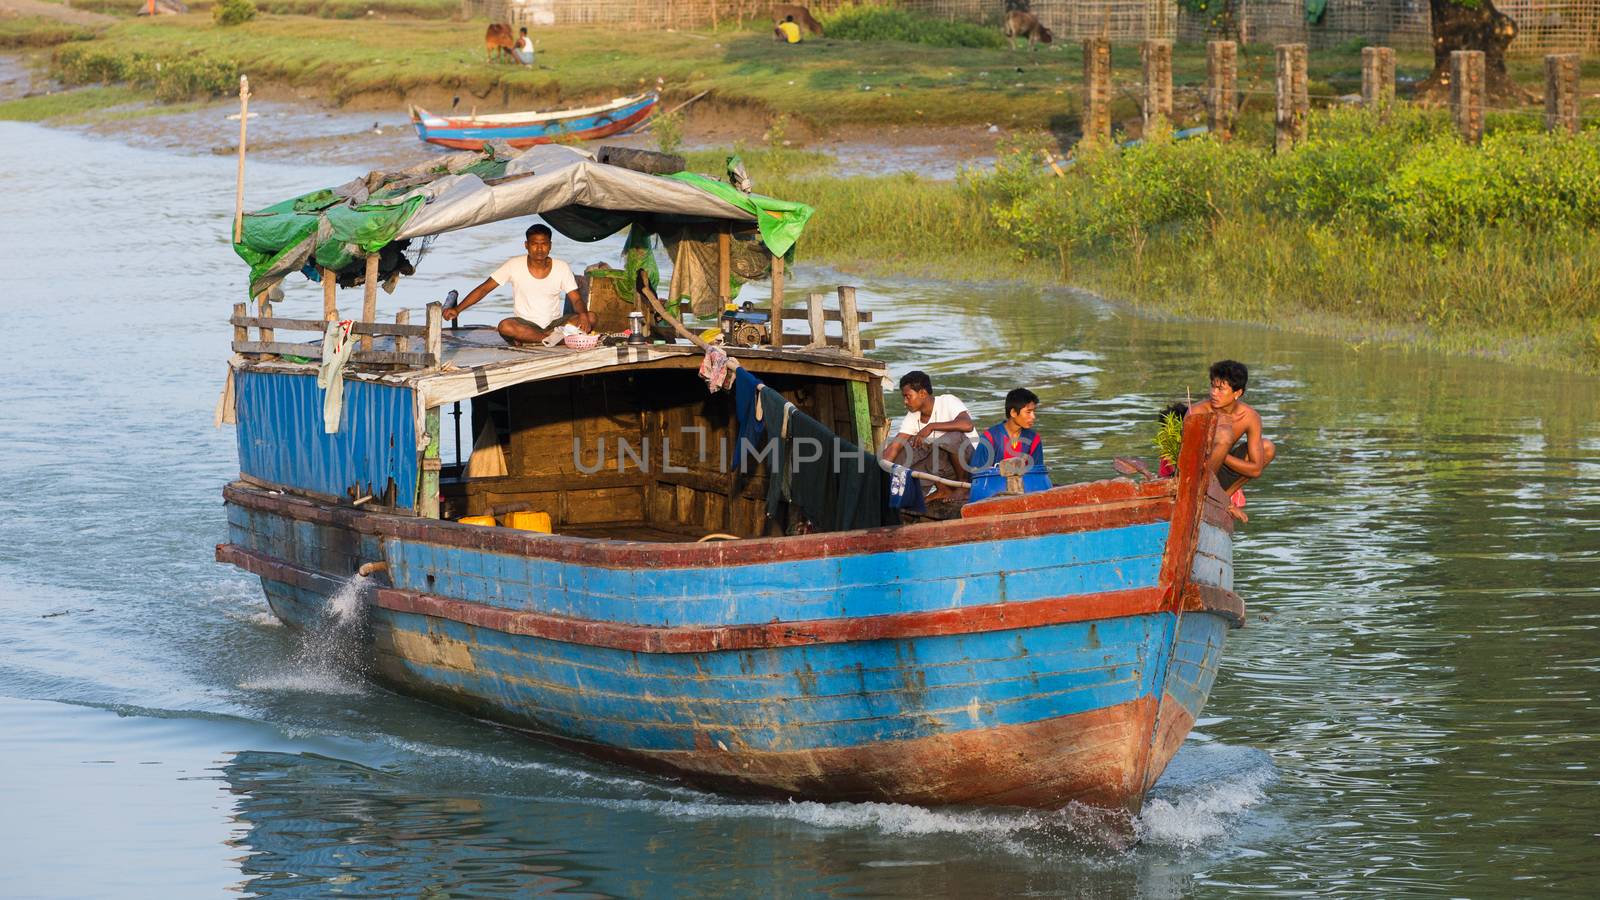 Sittwe, Rakhine State, Myanmar - October 16, 2014: Cargo vessel navigating a canal near Sittwe, the capital of the Rakhine State in Myanmar.